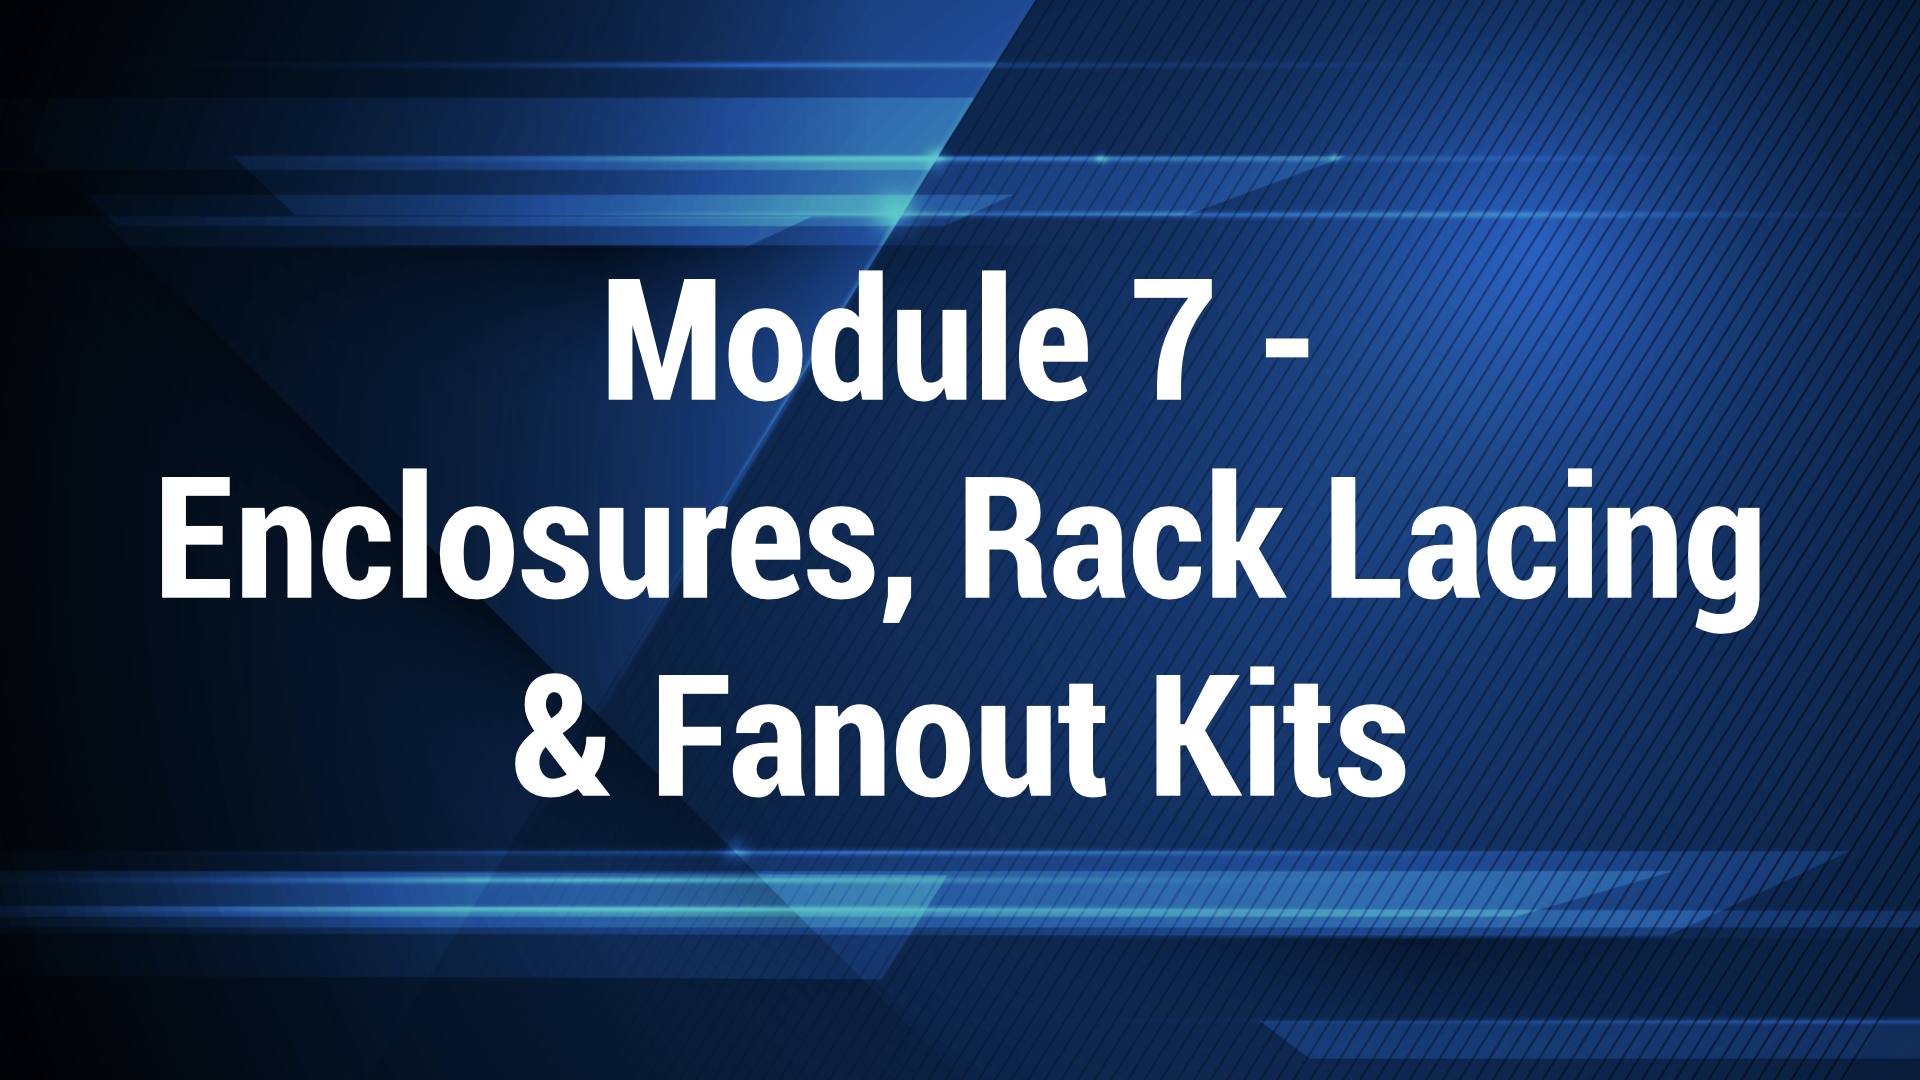 Module 7 - Enclosures, Rack Lacing and Fanout Kits